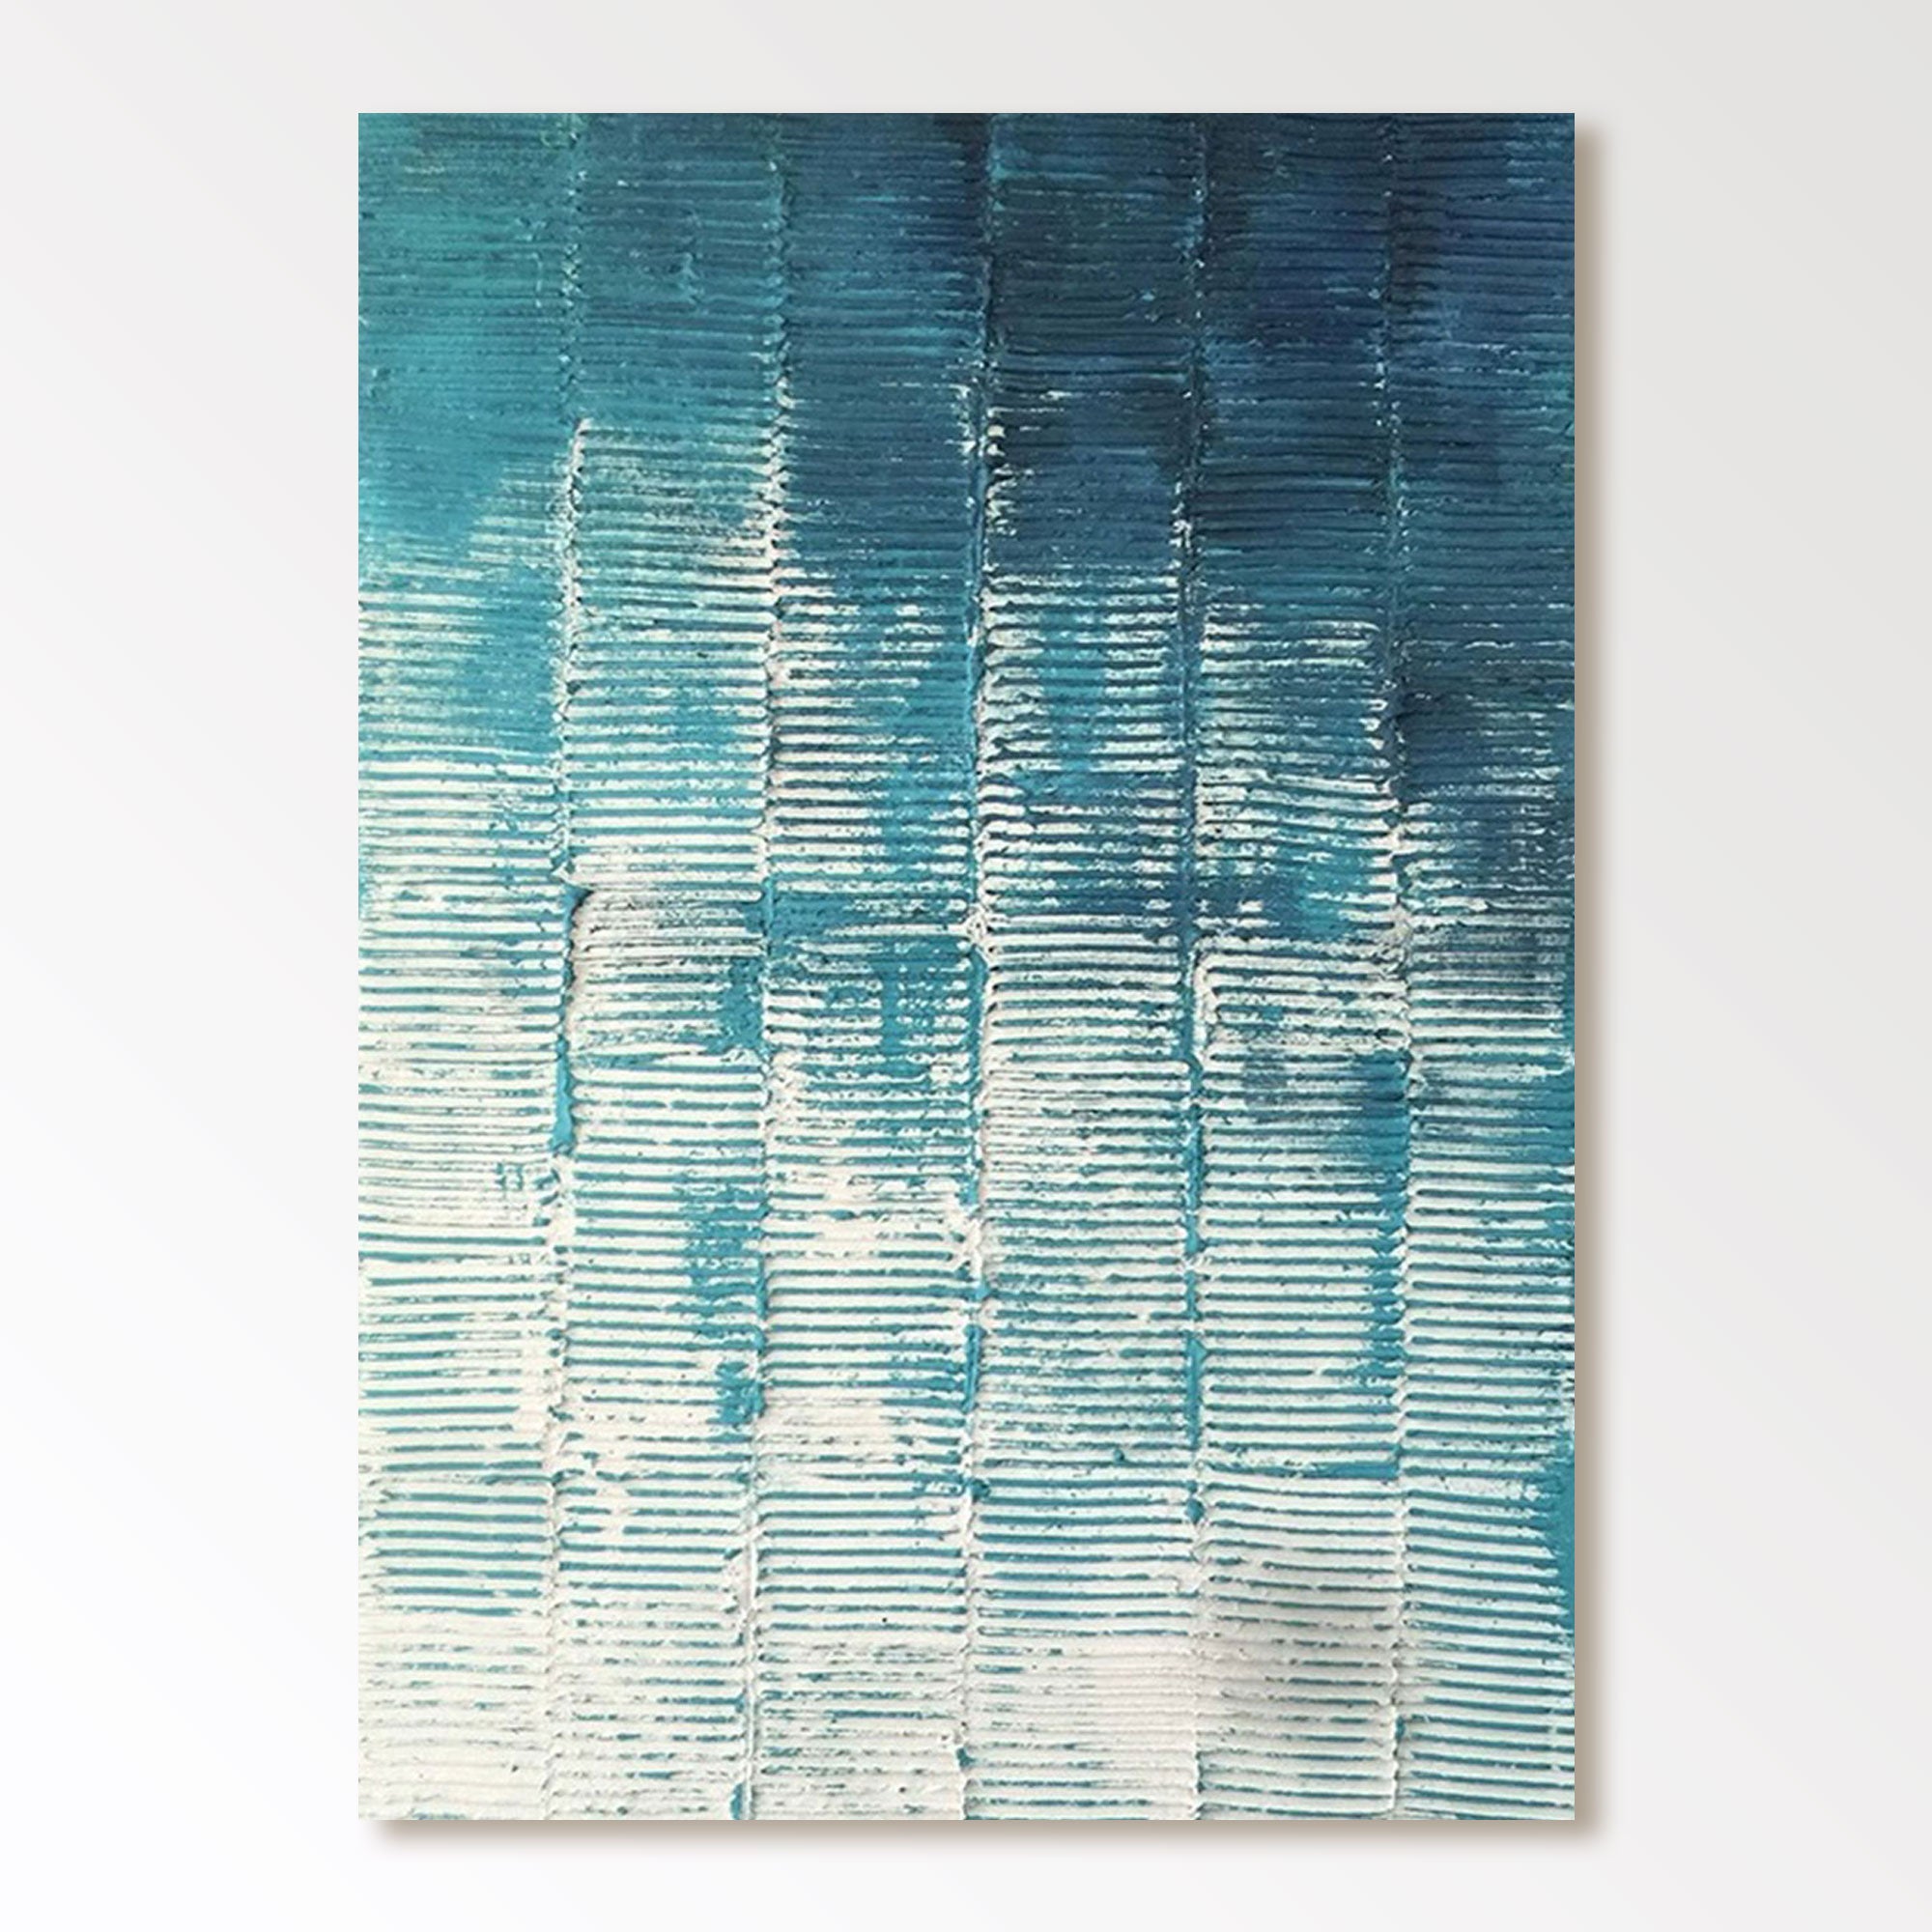 Textured Painting "Azure"